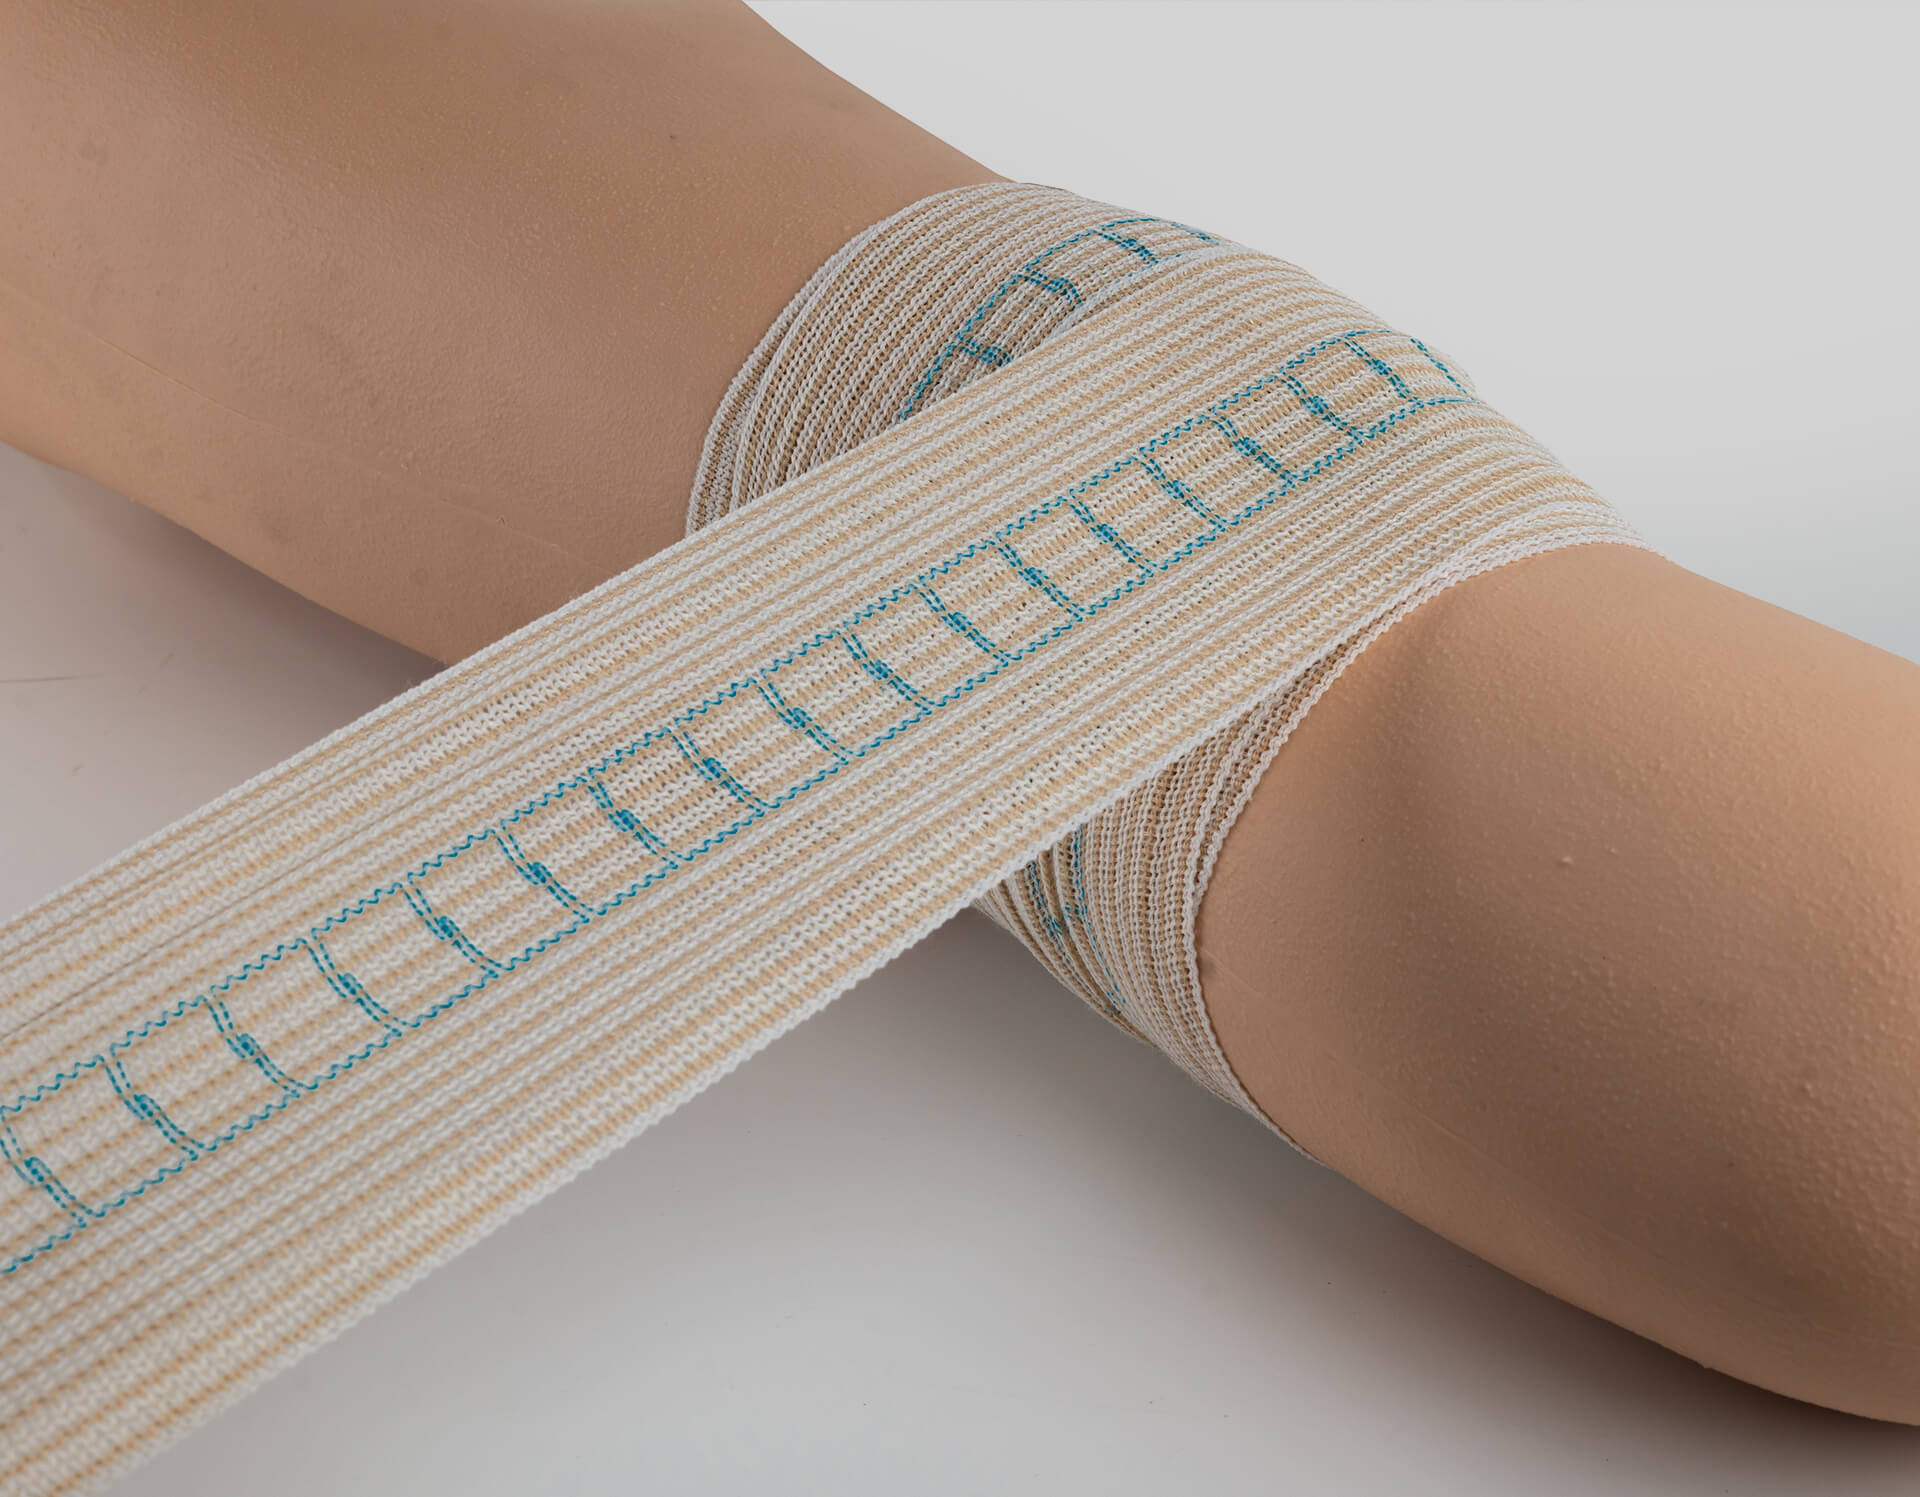 TRAK® Controlled Compression Bandage | Consistent & Measured Care